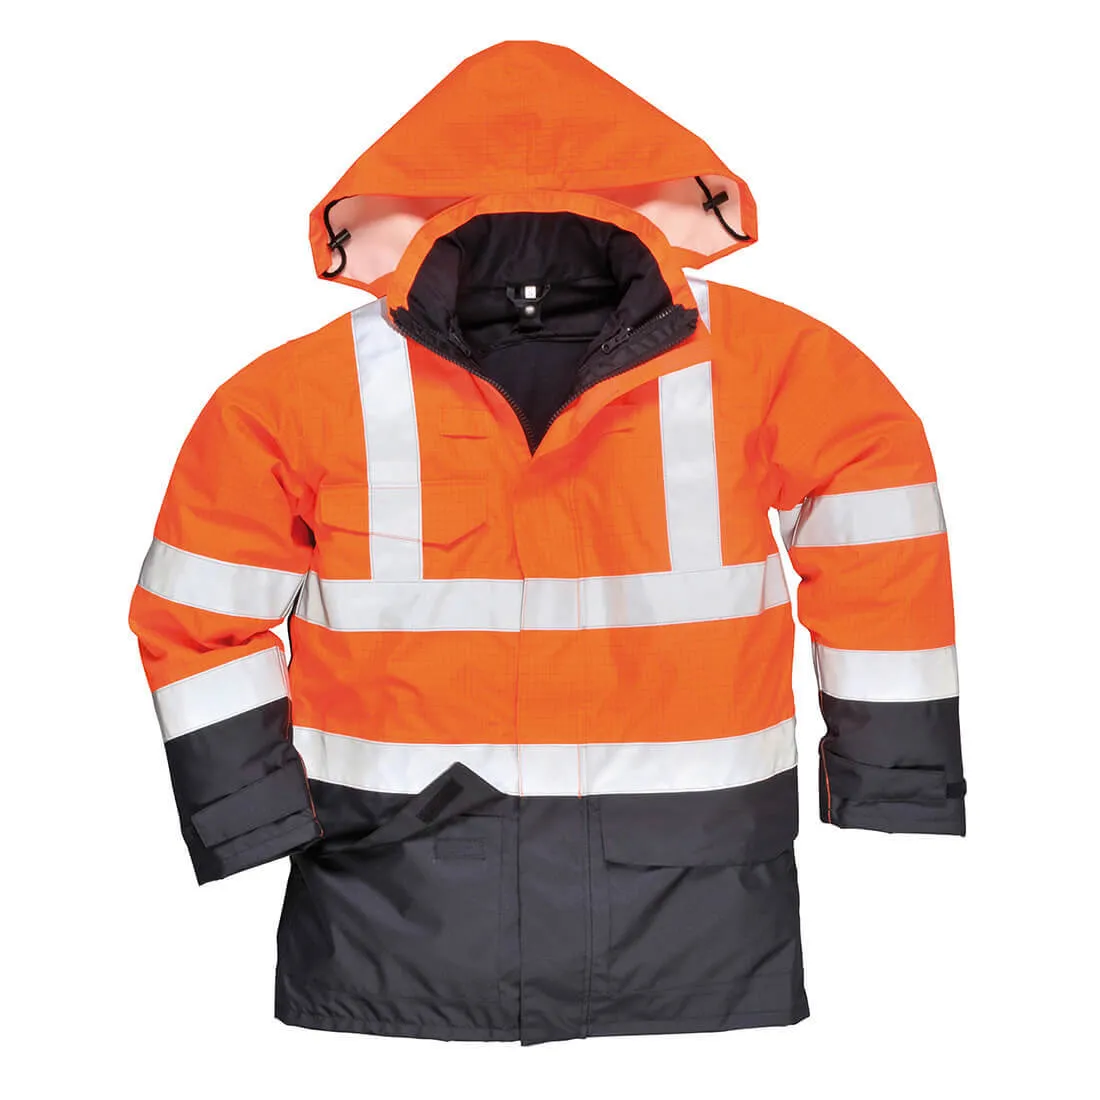 Biz Flame Hi Vis Flame Resistant Rain Multi Protection Jacket - Orange / Navy, S